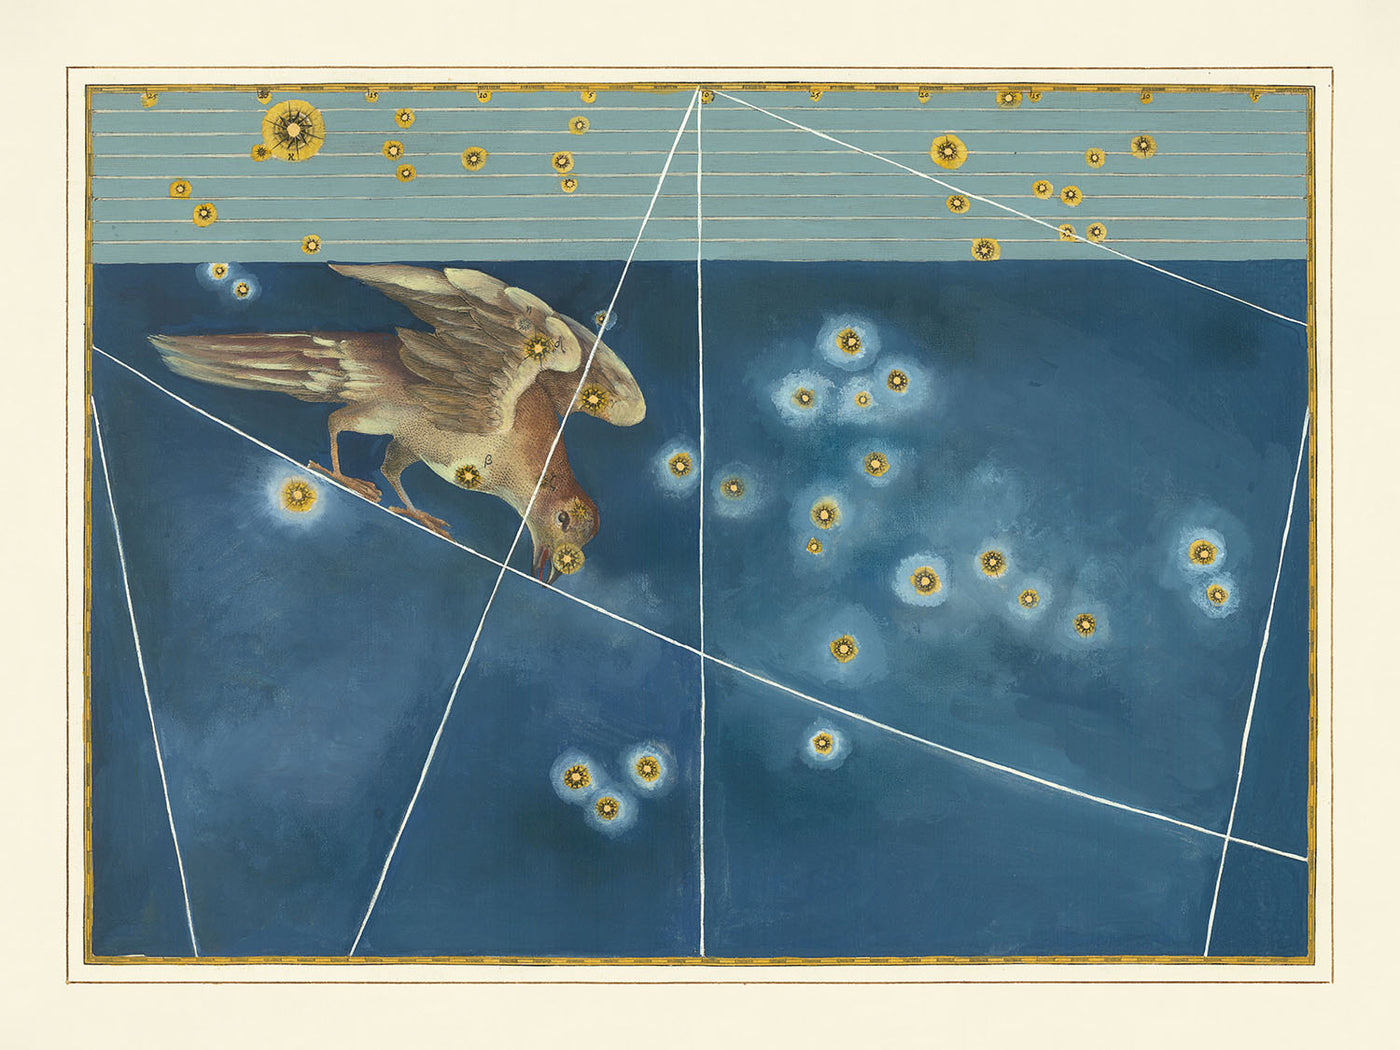 Old Star Map of Corvus by Johann Bayer, 1603 - Celestial Constellation Chart